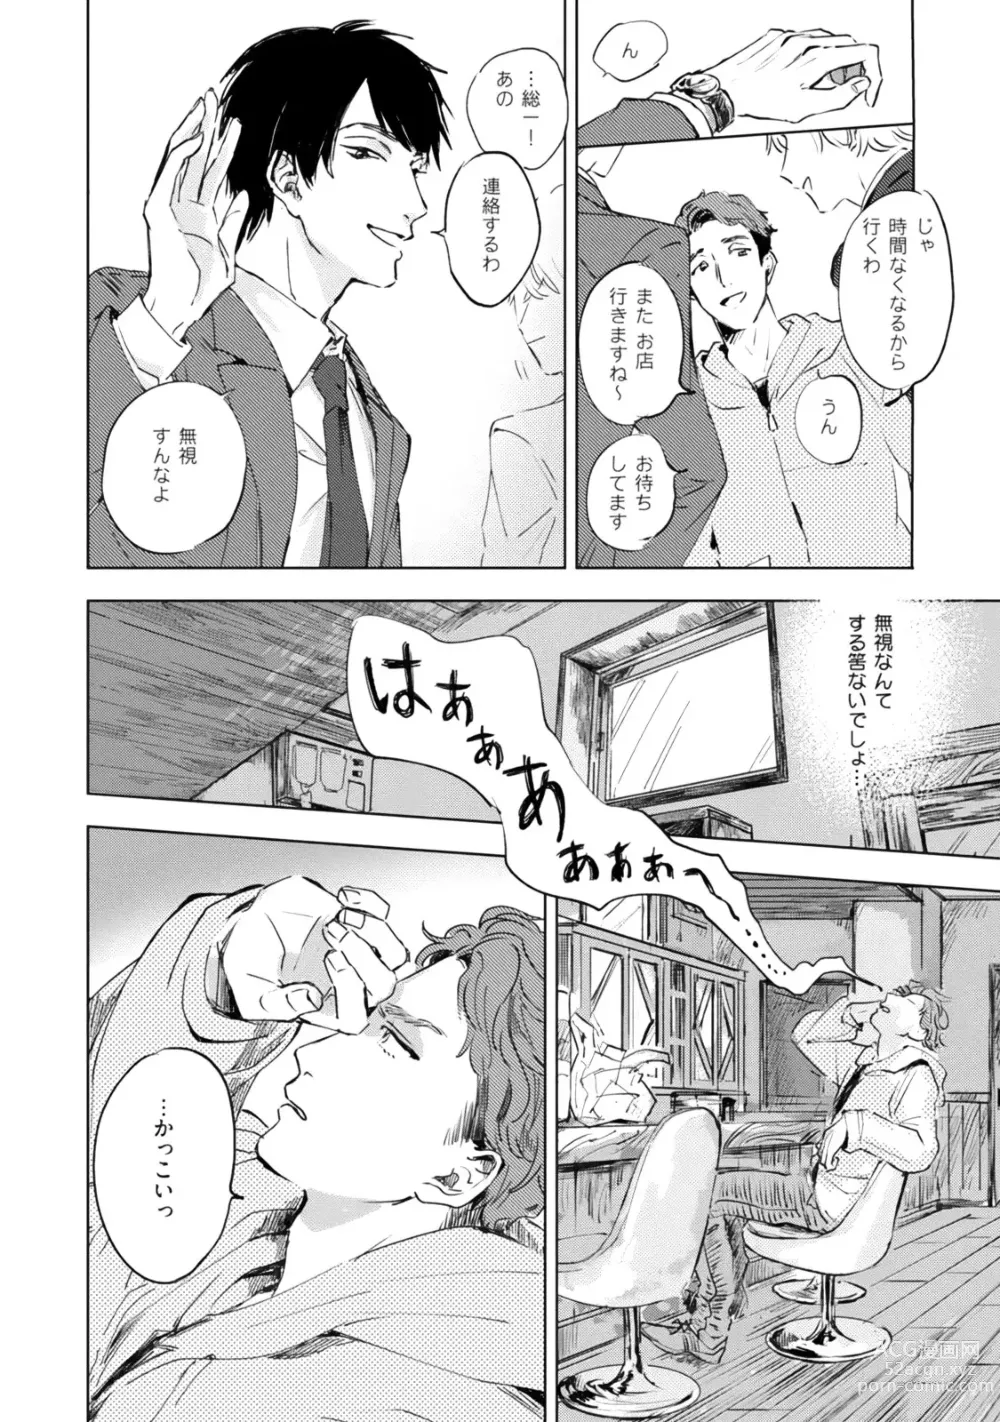 Page 12 of manga Kogarete Kogashite